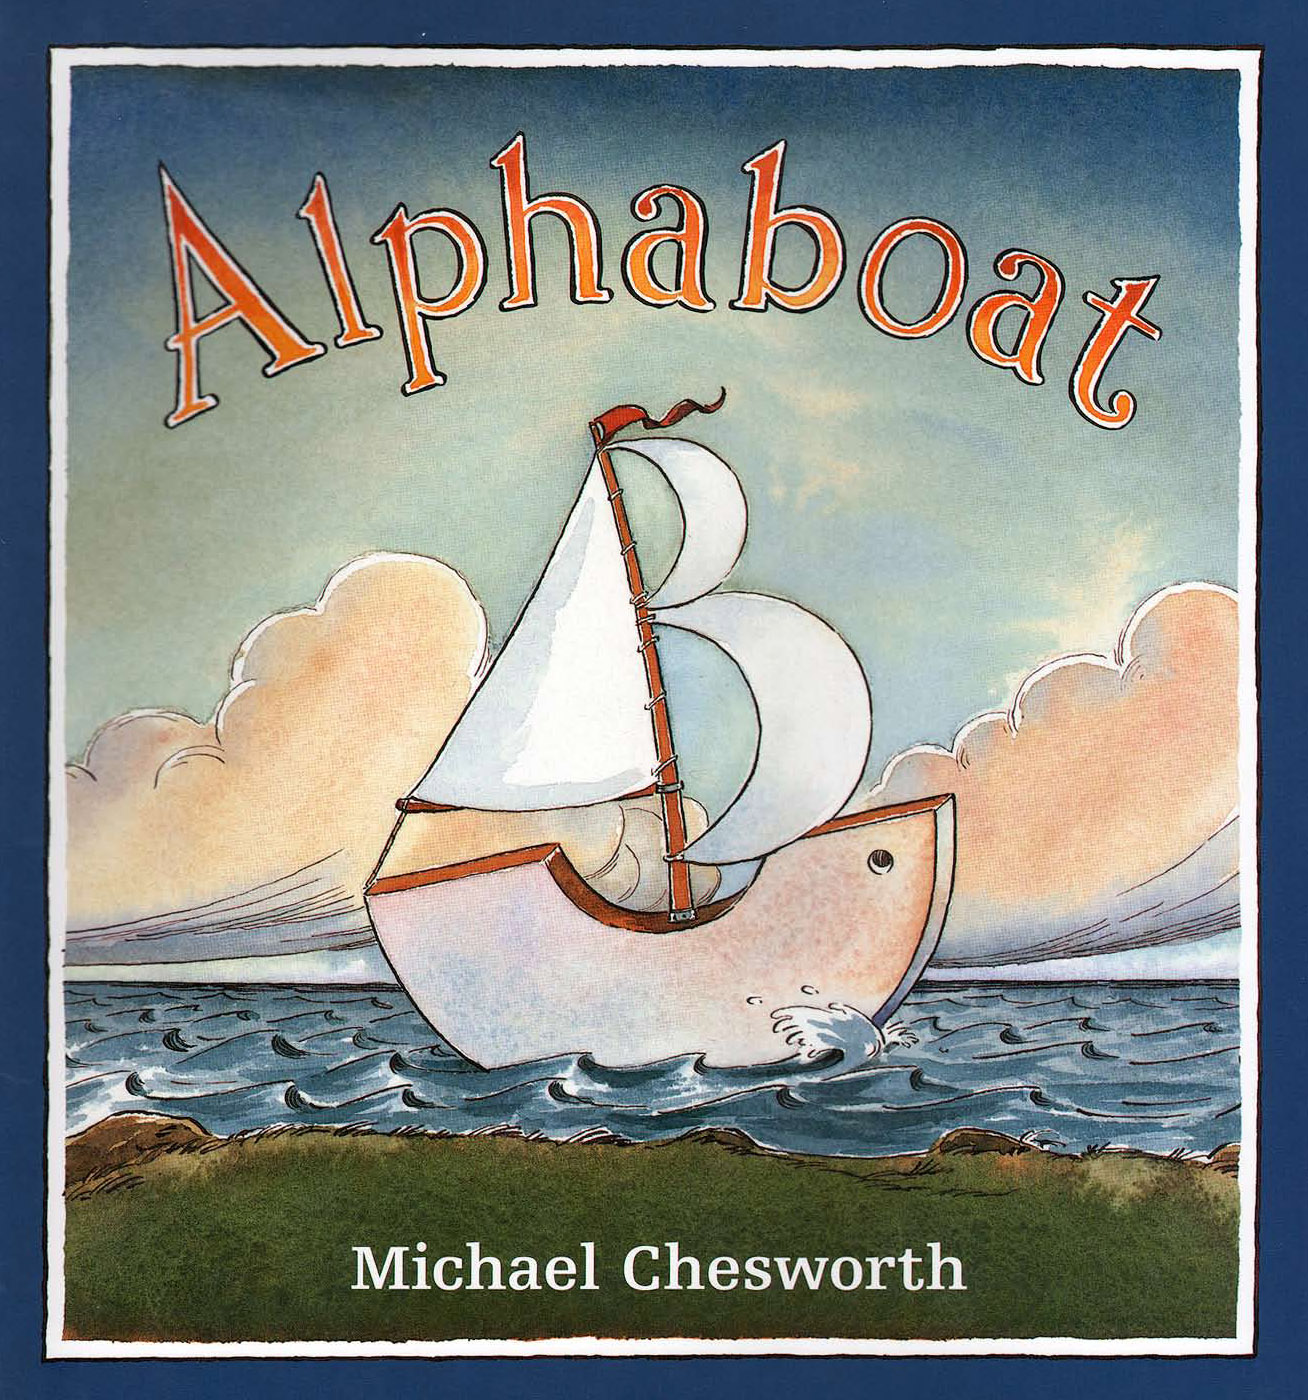 Alphaboat